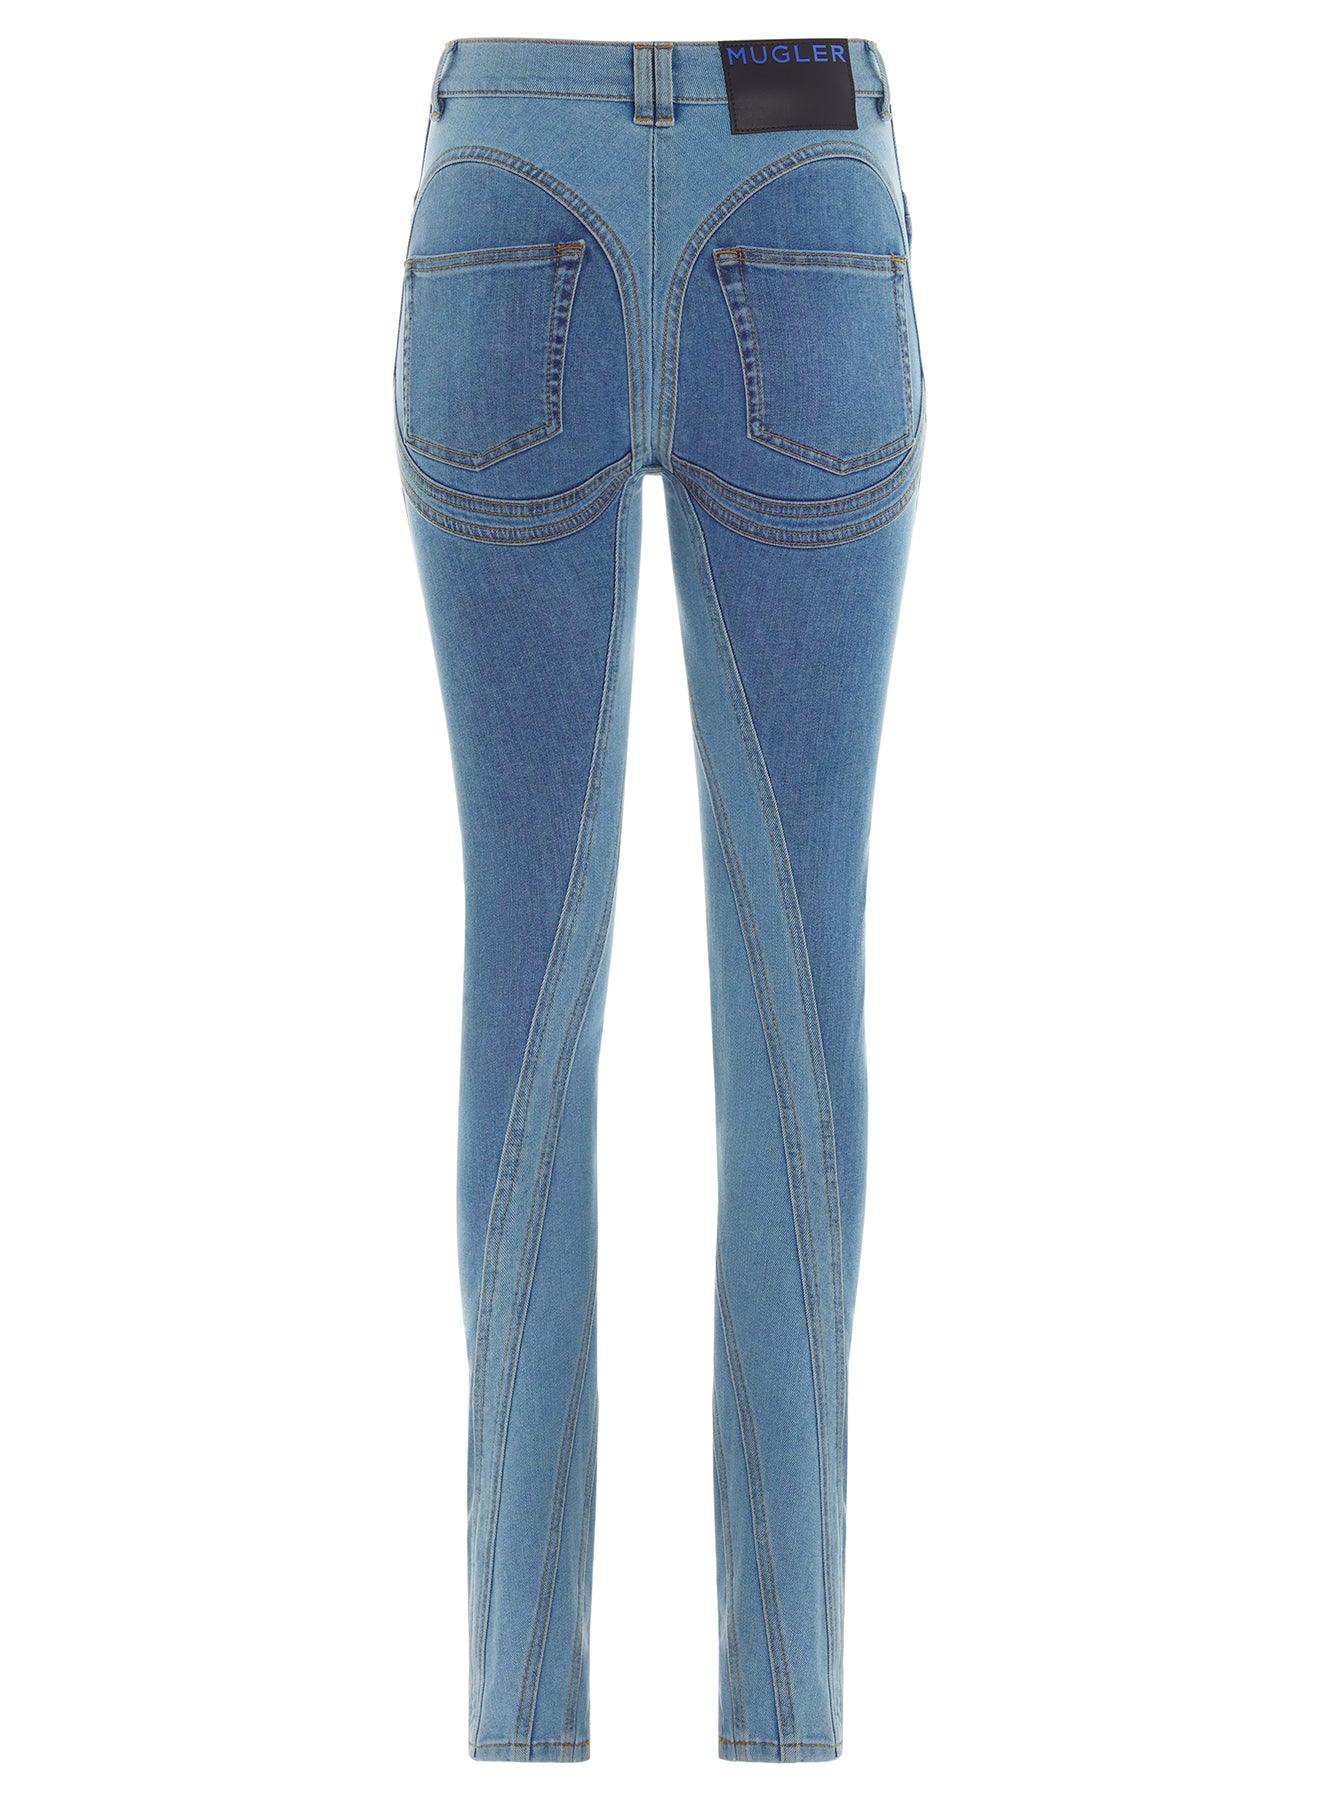 Beyond Blue: 9 Alternative Colors for Denim Jeans | MakeYourOwnJeans